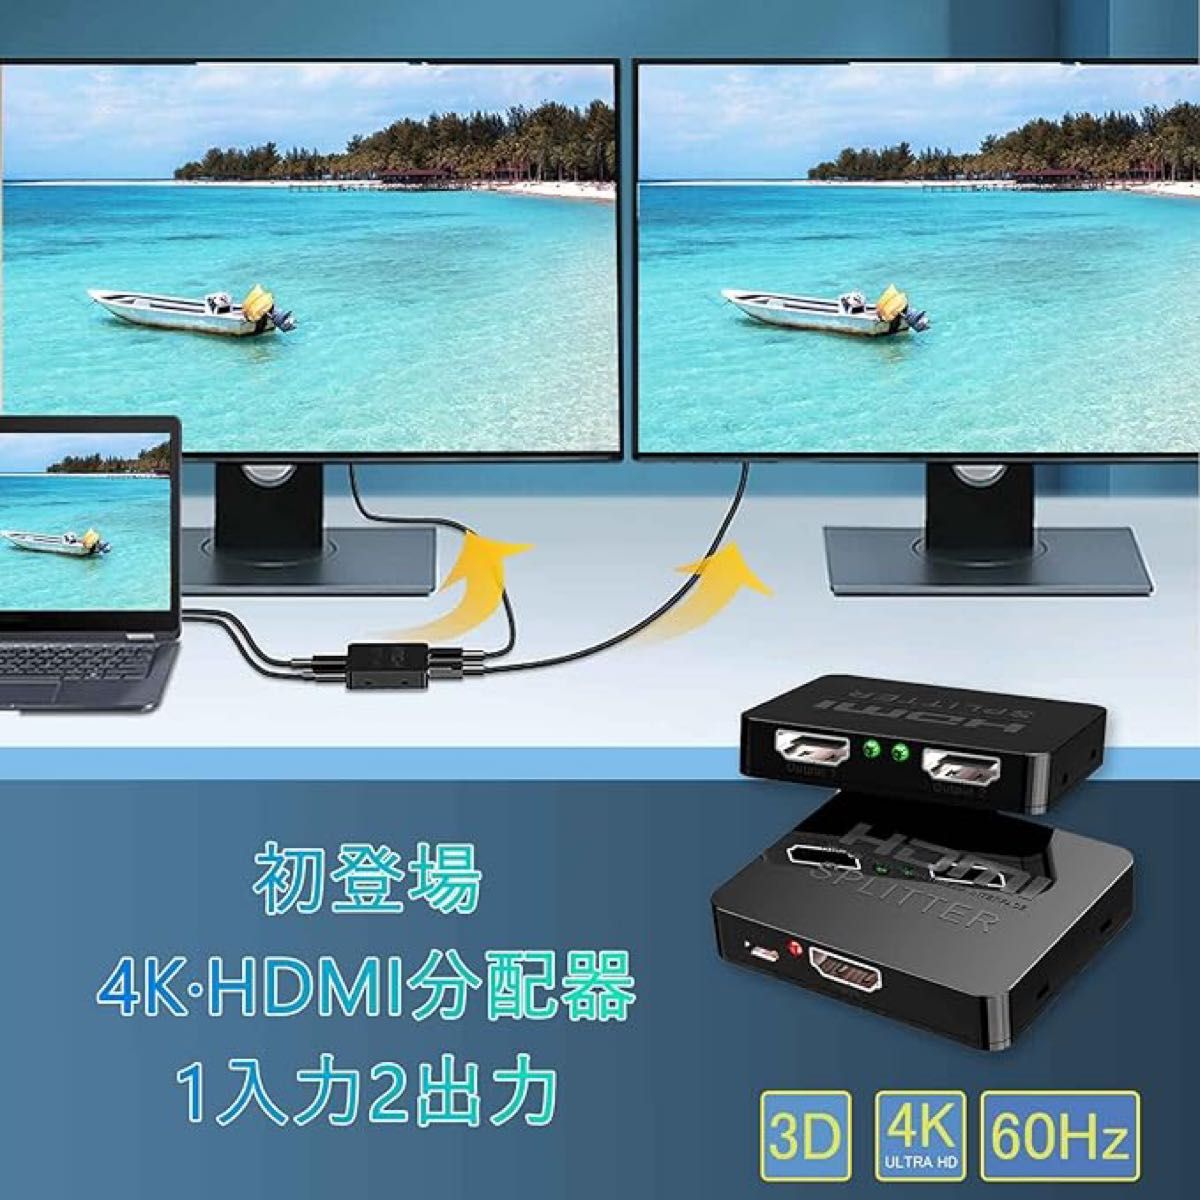 HDMI分配器 1入力2出力 4K スプリッター 3D 1080p HDMI1.4 PS5 Xbox HDTV DVD 対応